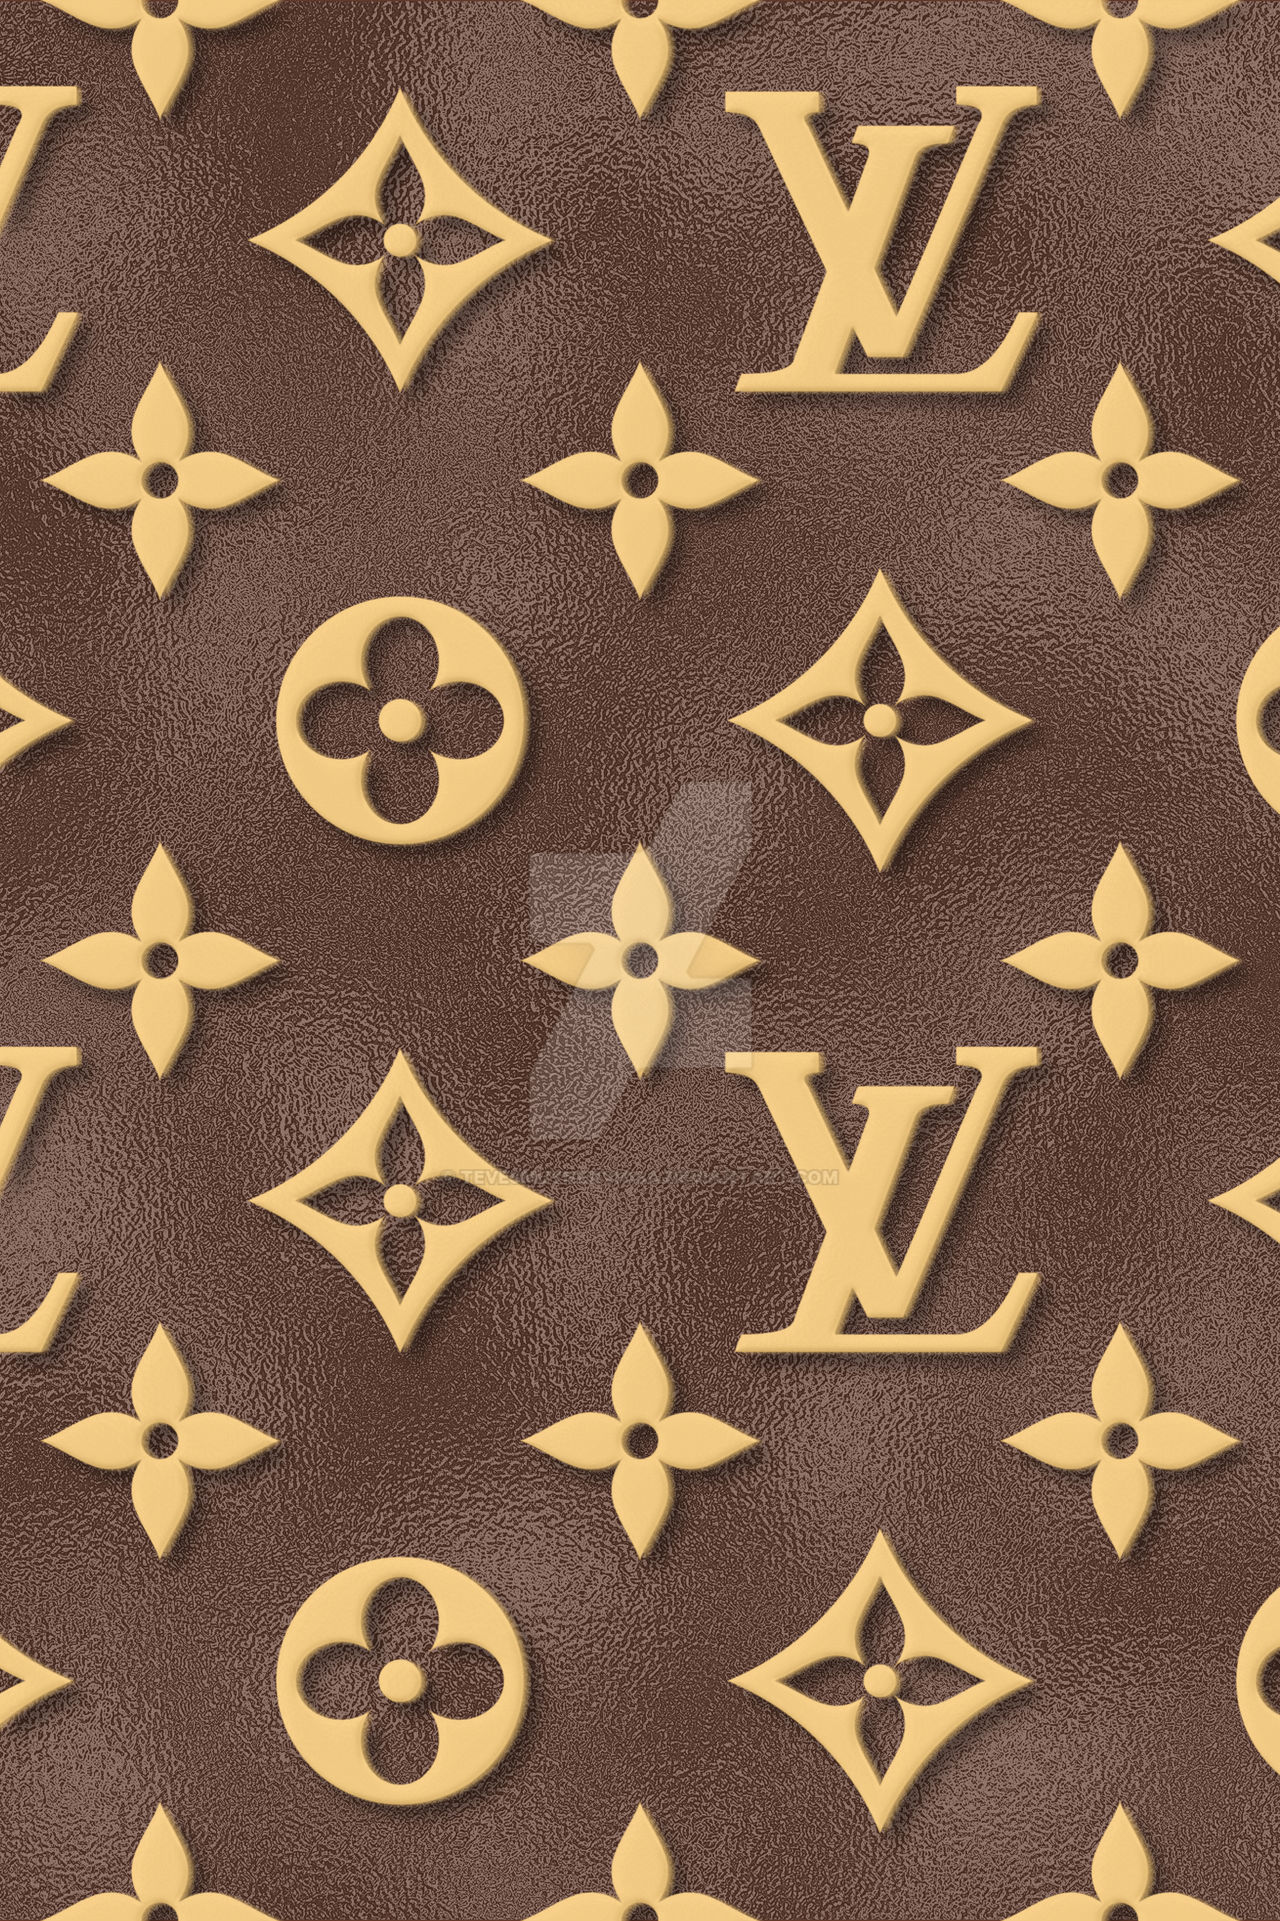 HQ Gold LV Monogram Wallpaper by TeVesMuyNerviosa on DeviantArt